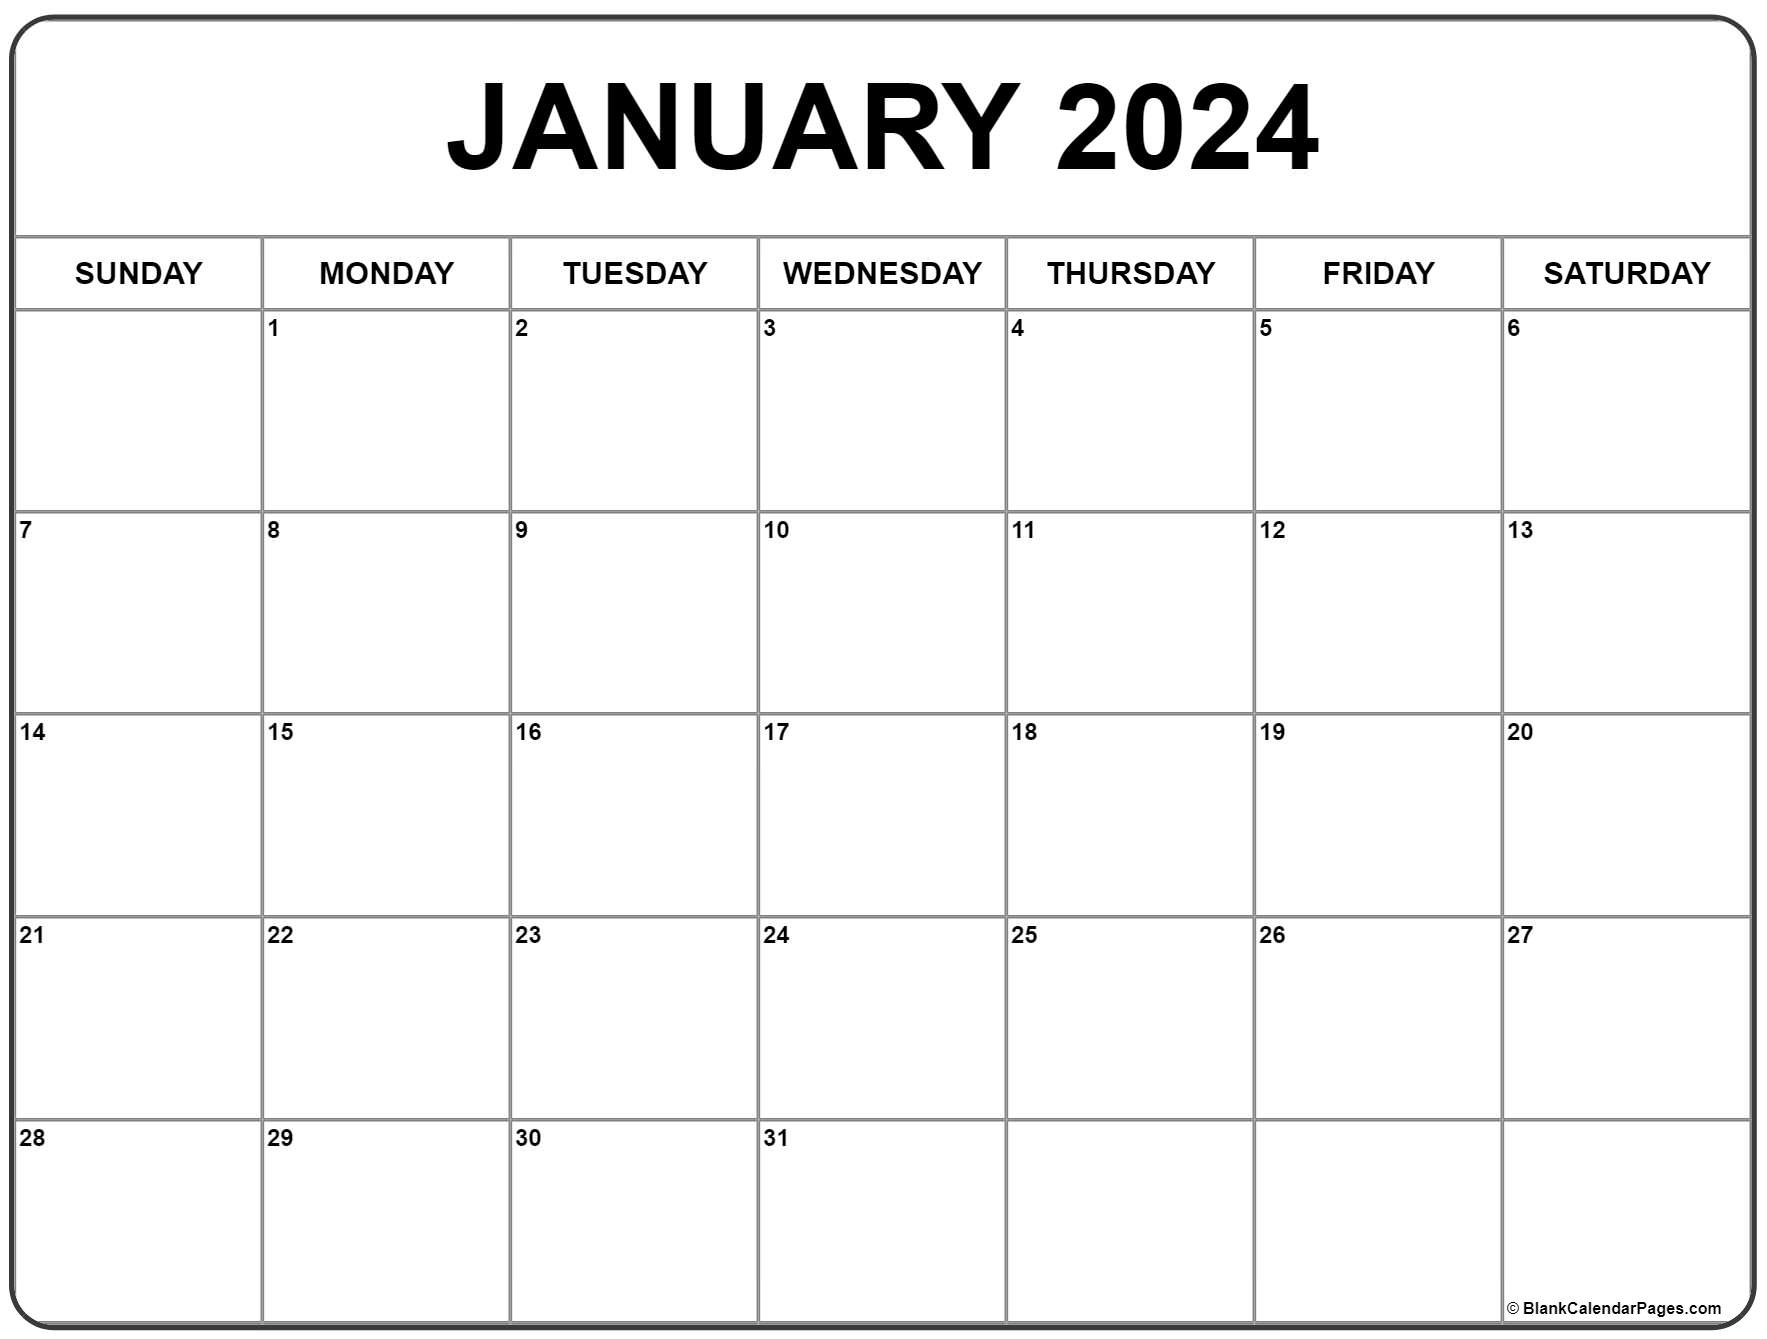 January 2024 Calendar | Free Printable Calendar for Printable Monthly Calendar 2024